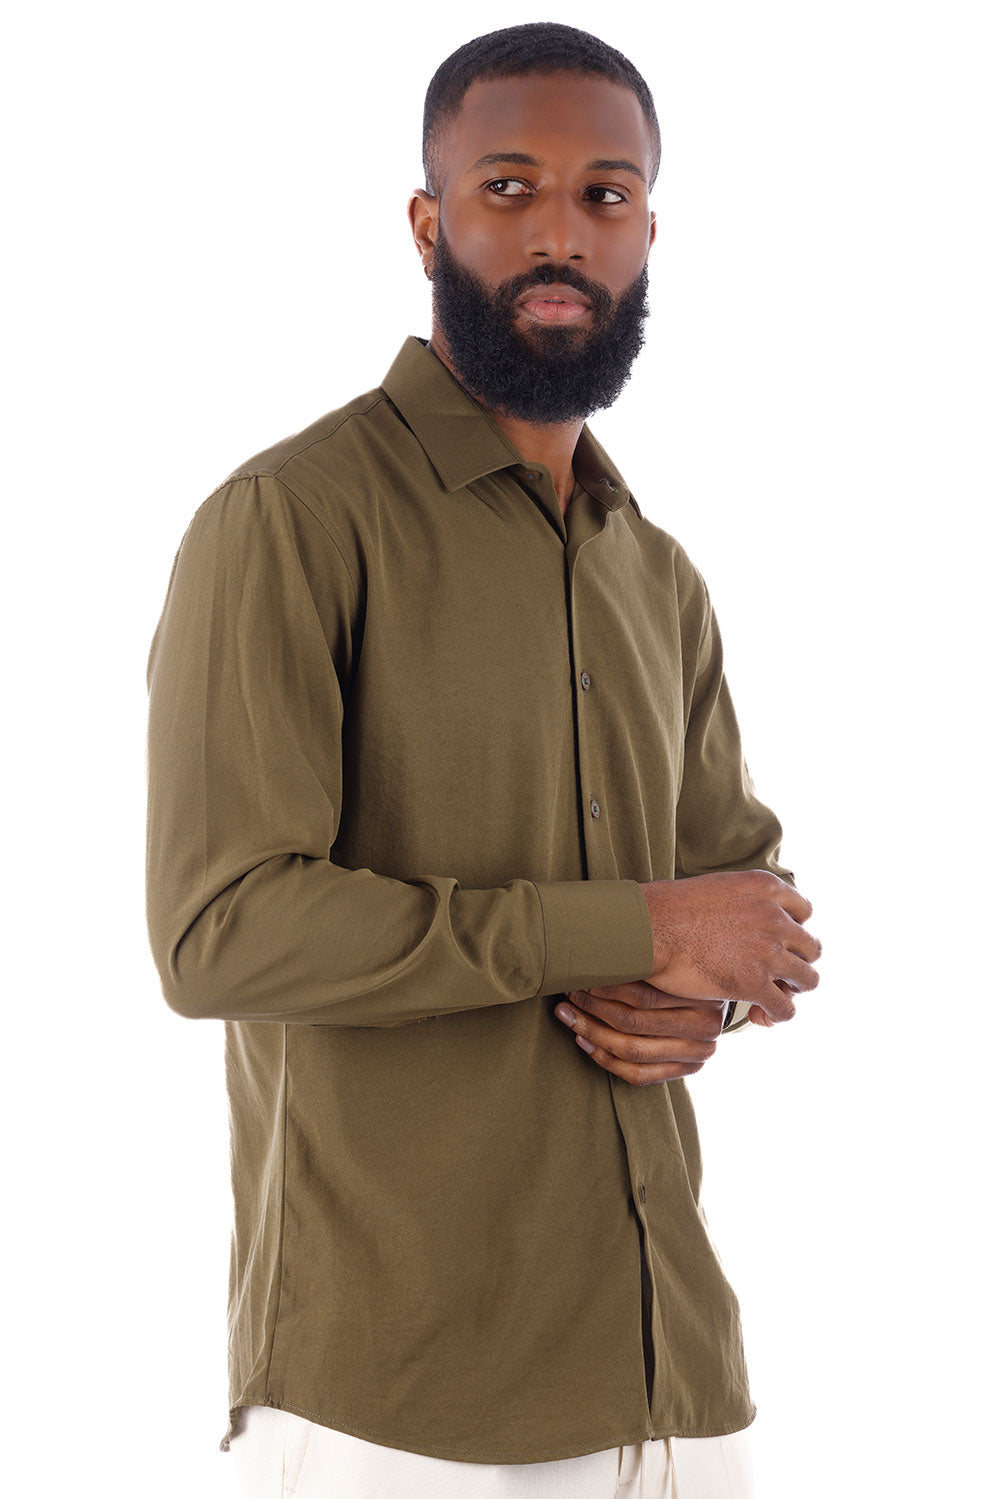 BARABAS Men's Solid Color Casual Button Down Long Sleeve Shirt 4B33 Khaki